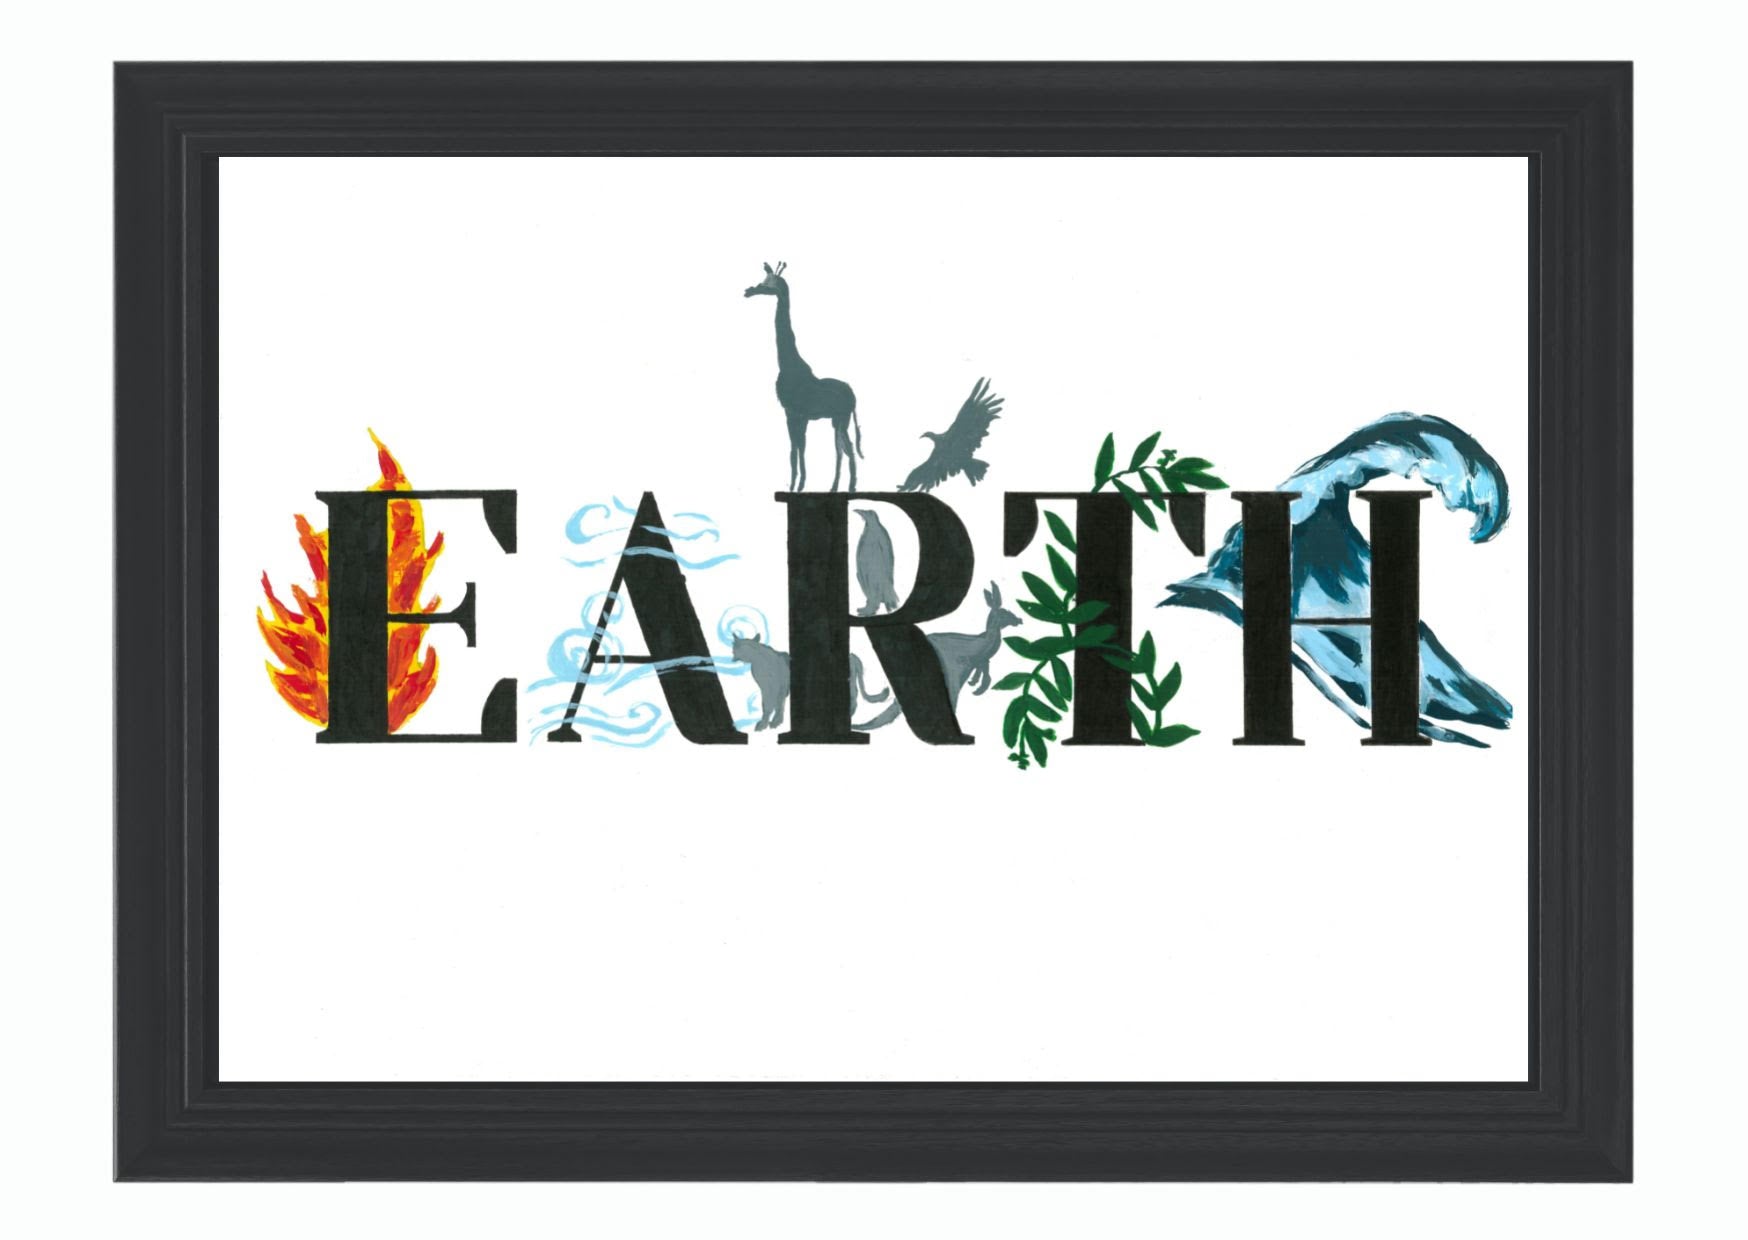 Arte Activista - EARTH (TIERRA) (copia firmada)